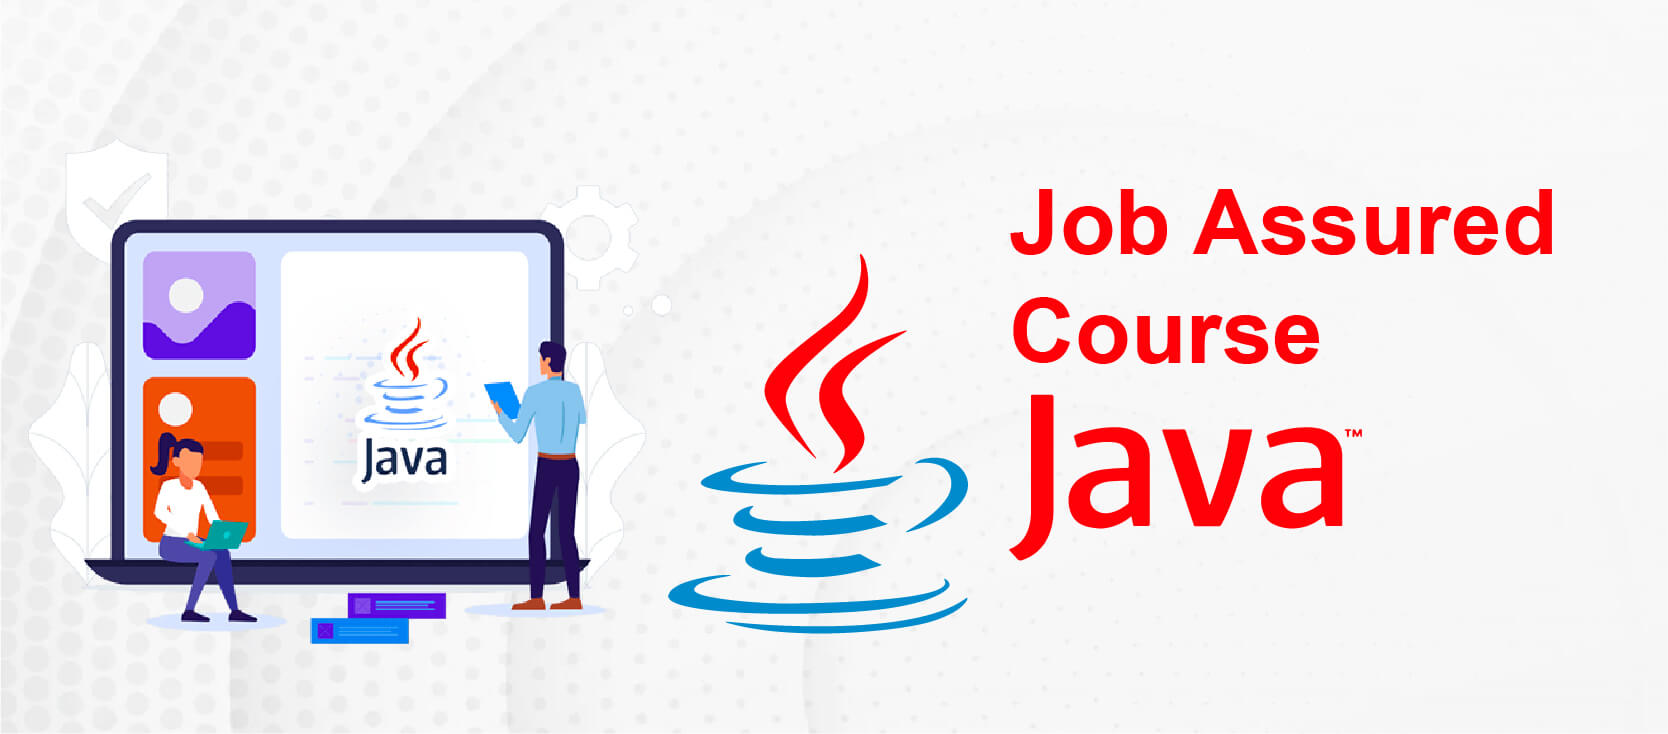 Java Job Assured Course